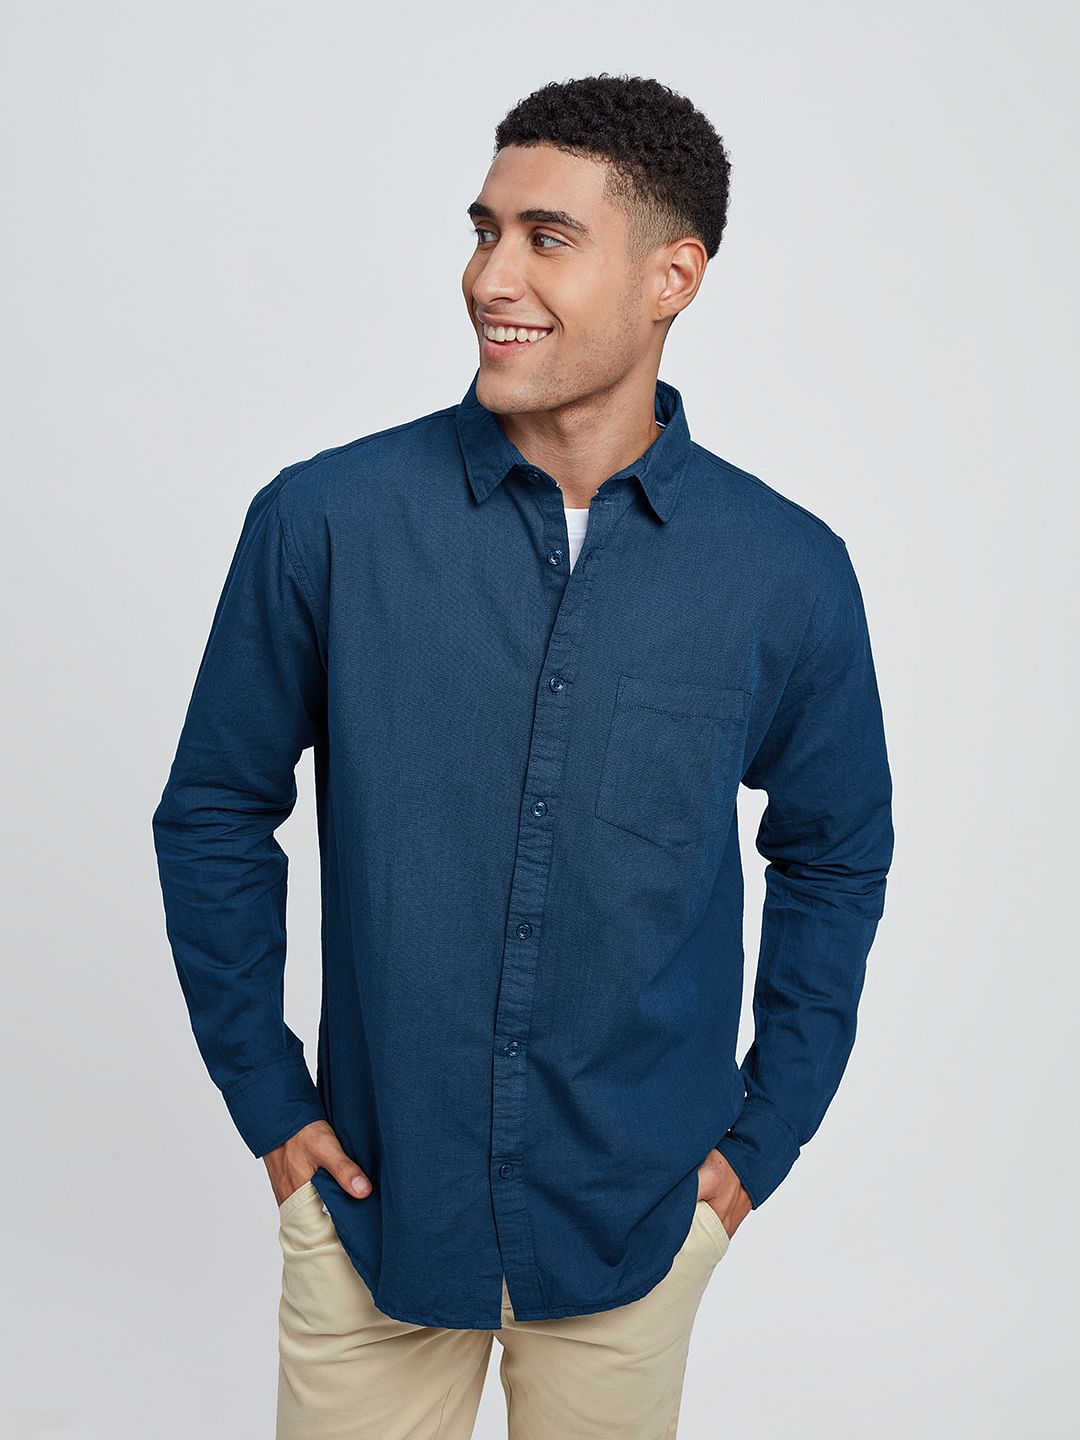 Oxford Shirt: Navy Blue